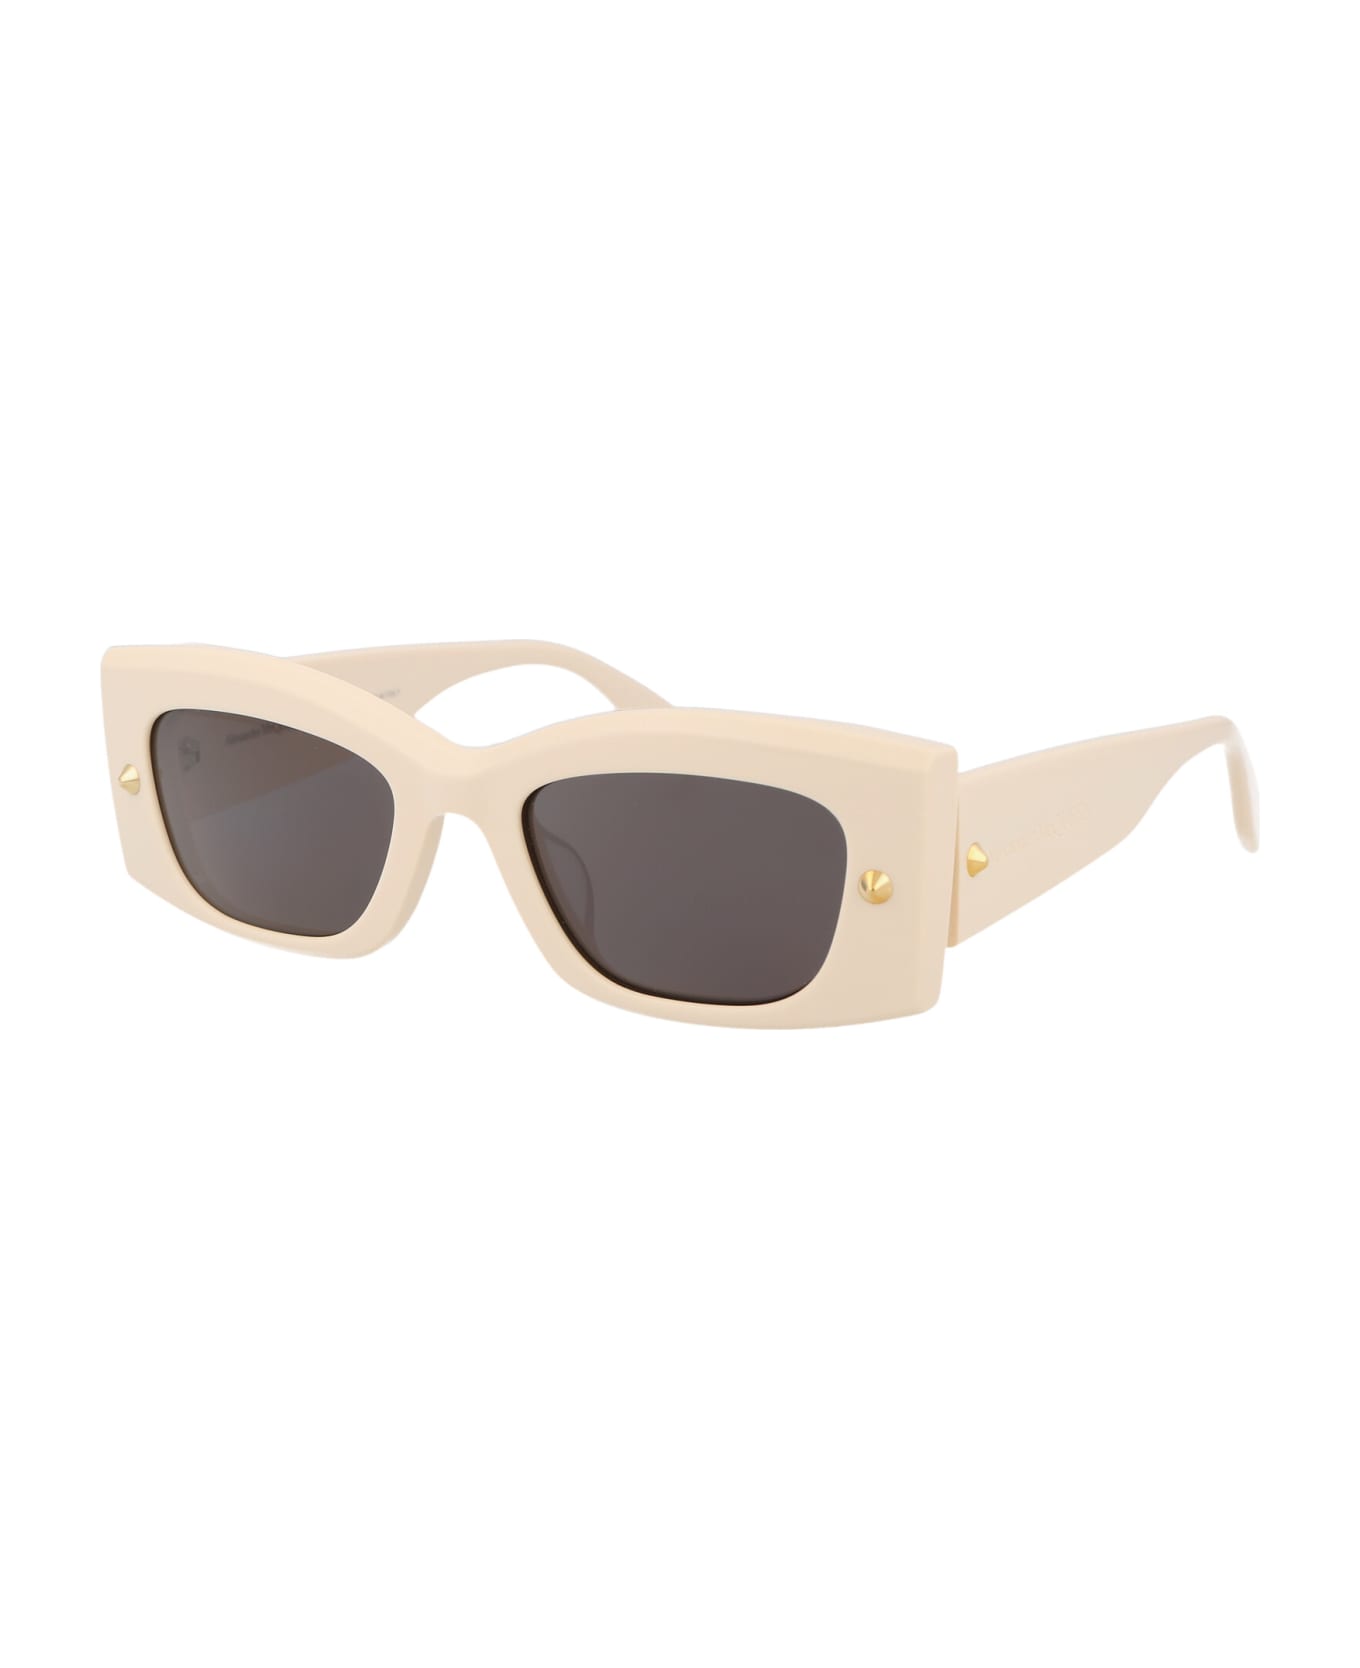 Alexander McQueen Eyewear Am0426s Sunglasses - 005 IVORY IVORY GREY サングラス